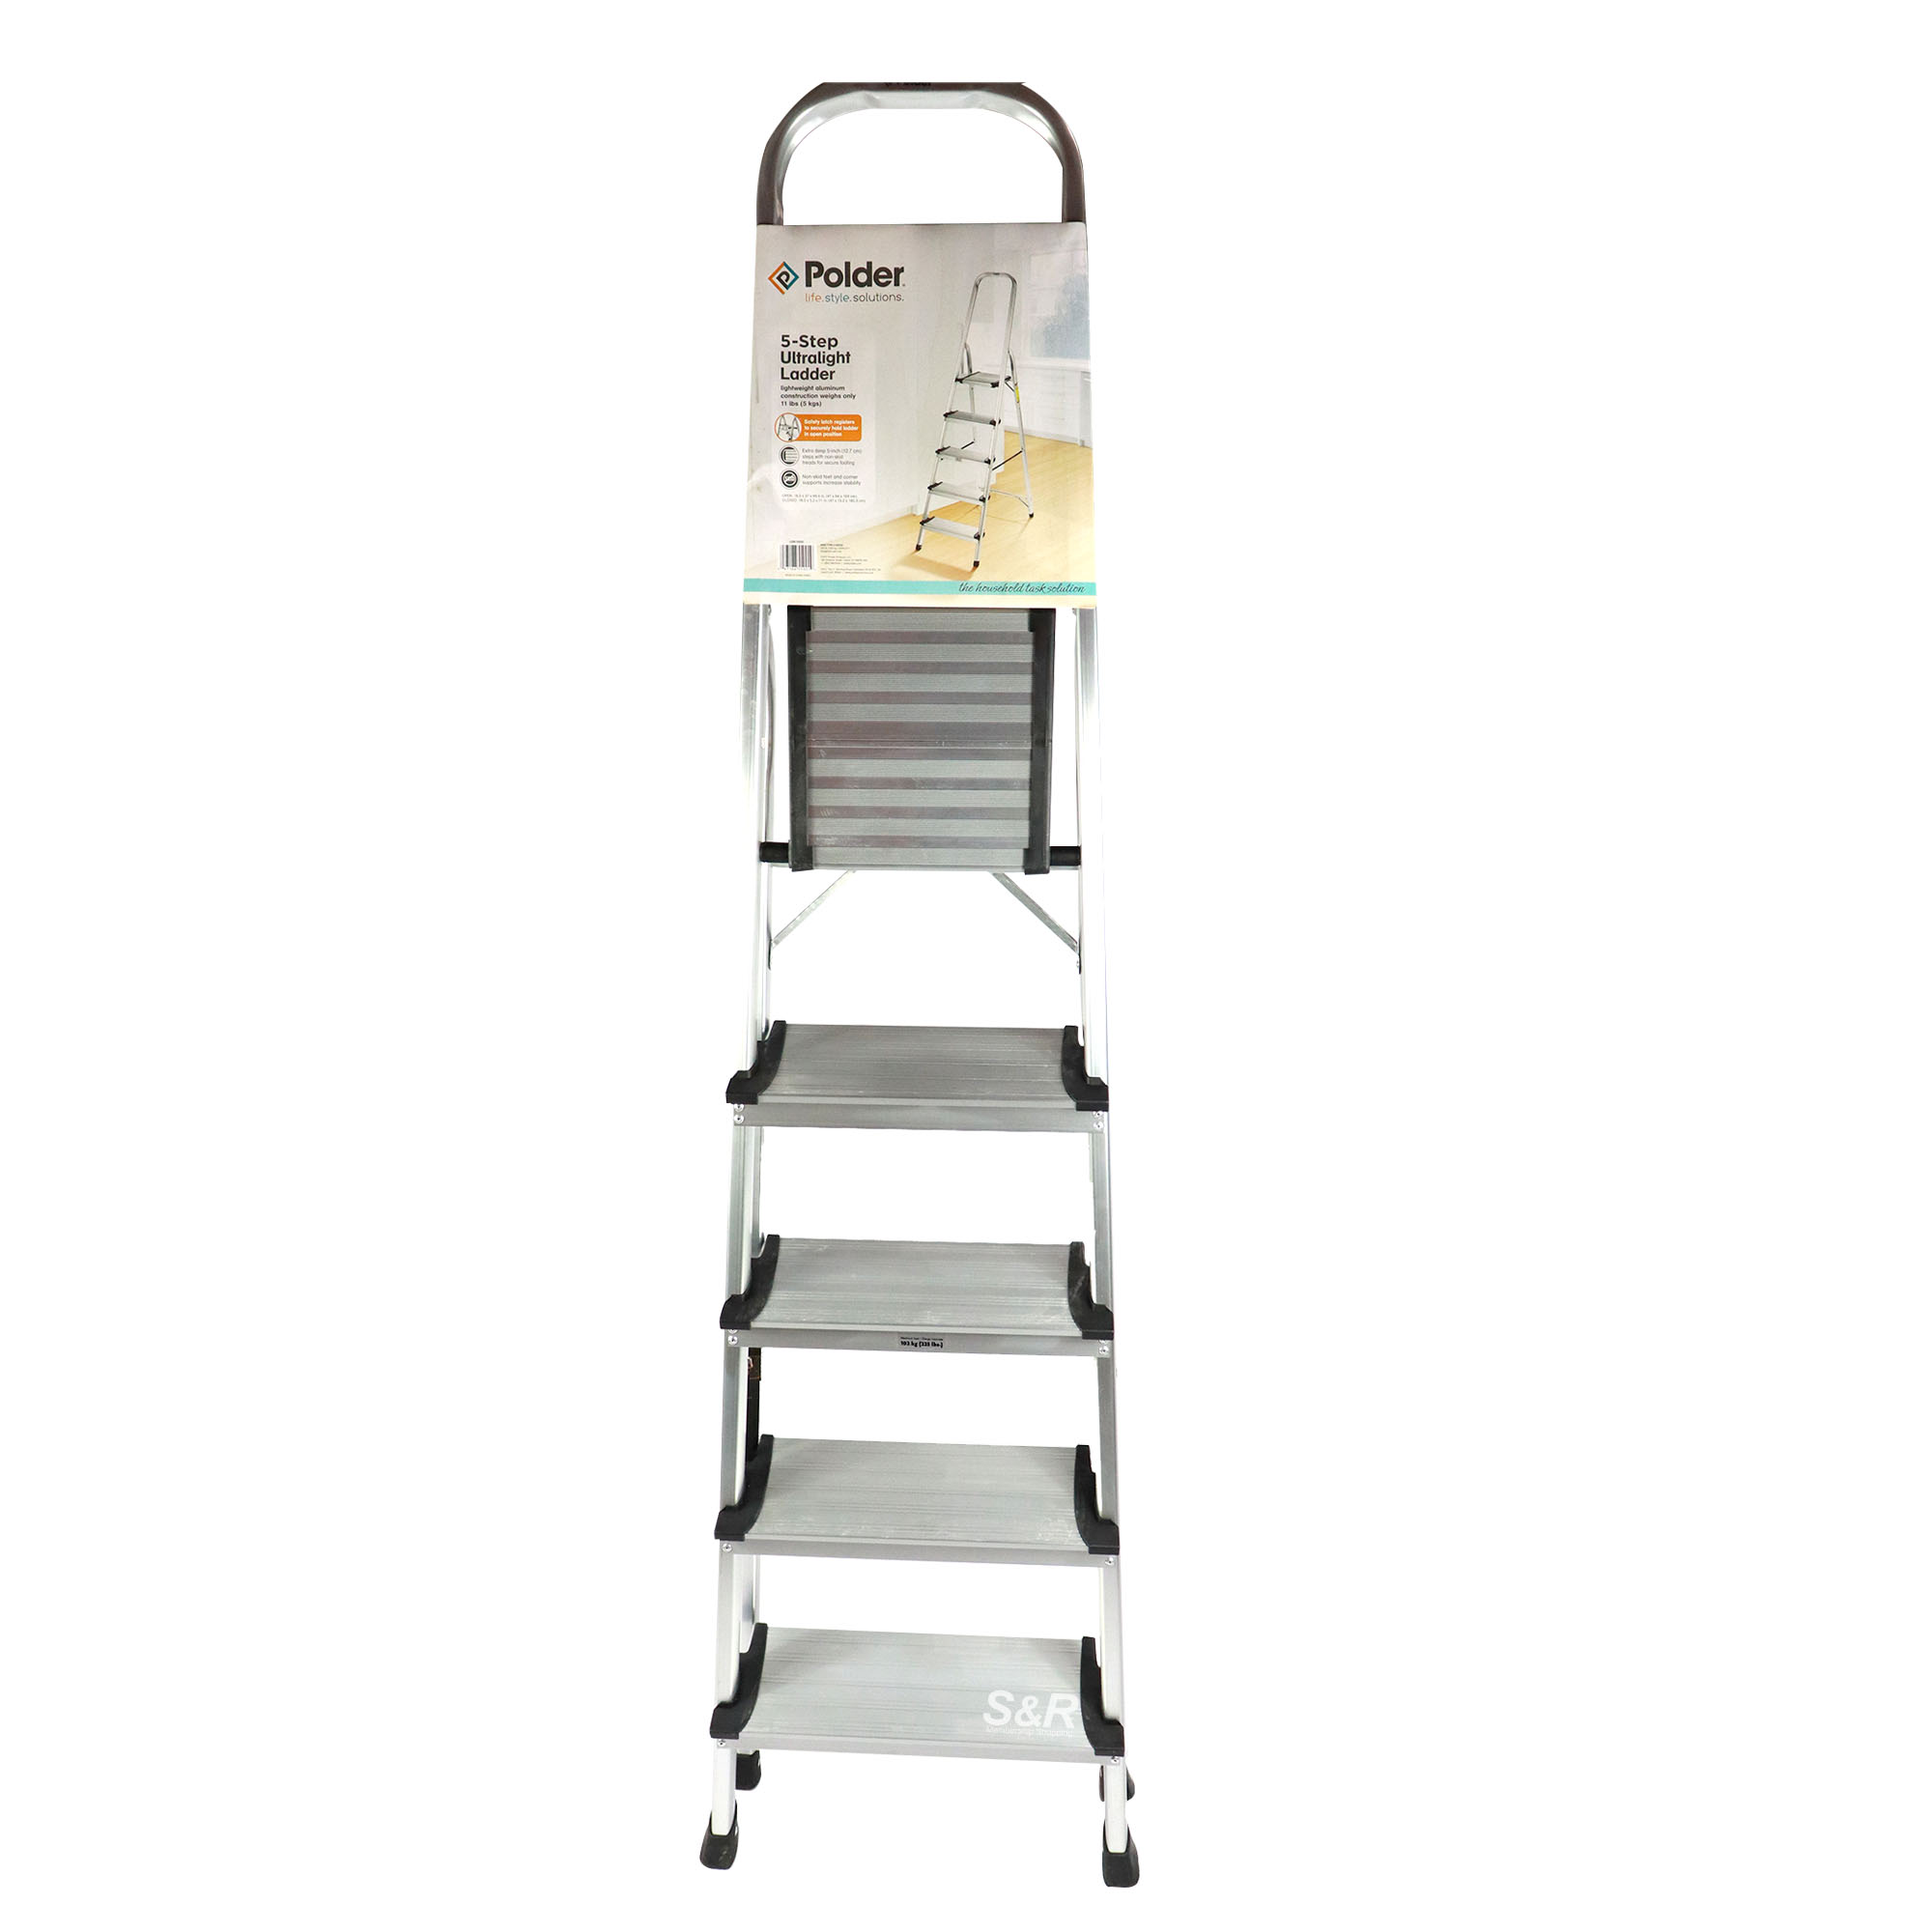 5-step Foldable Ultralight Ladder